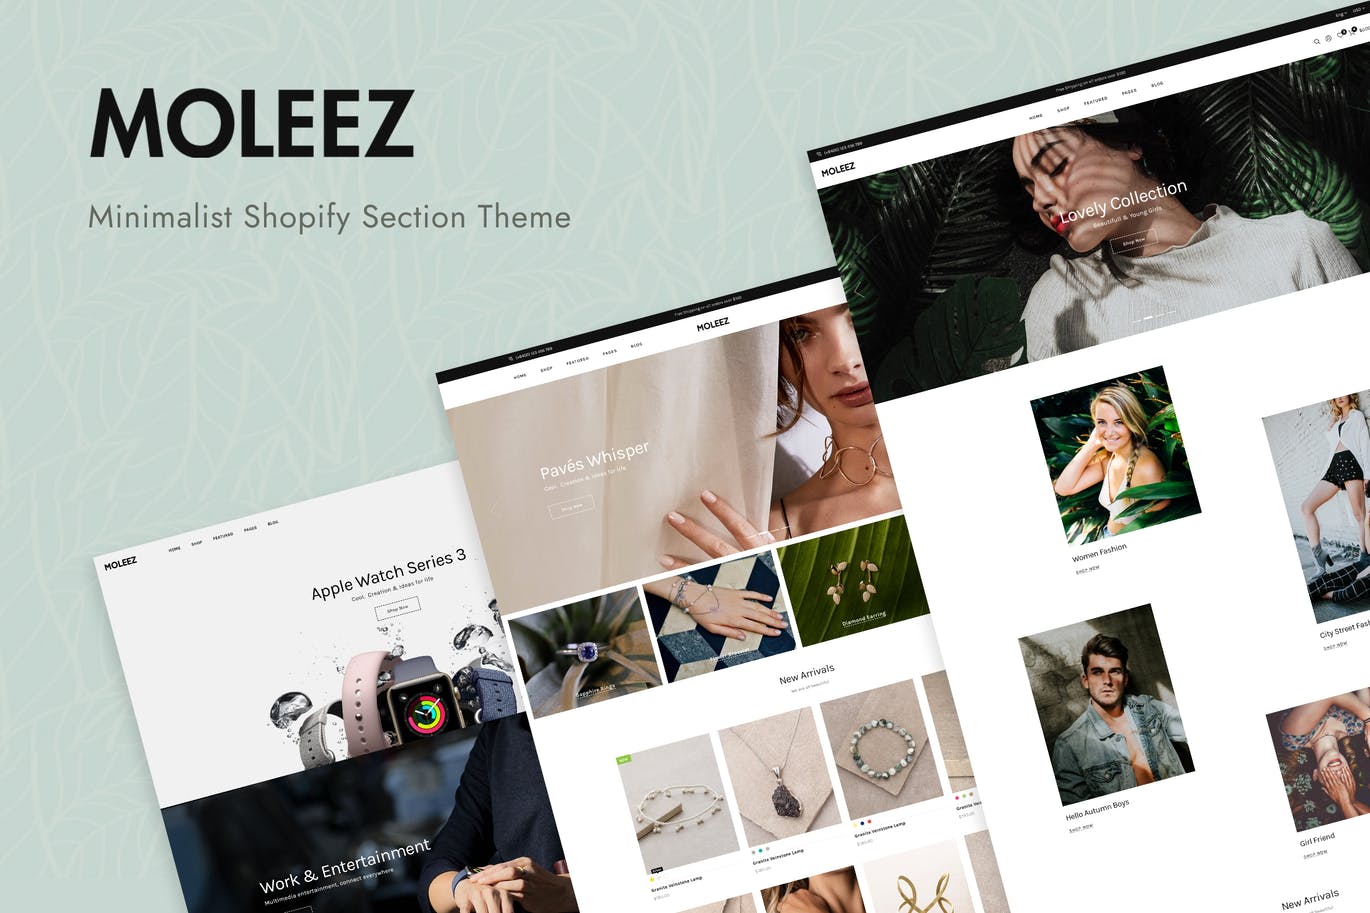 Moleez - Minimalist Shopify Section Theme